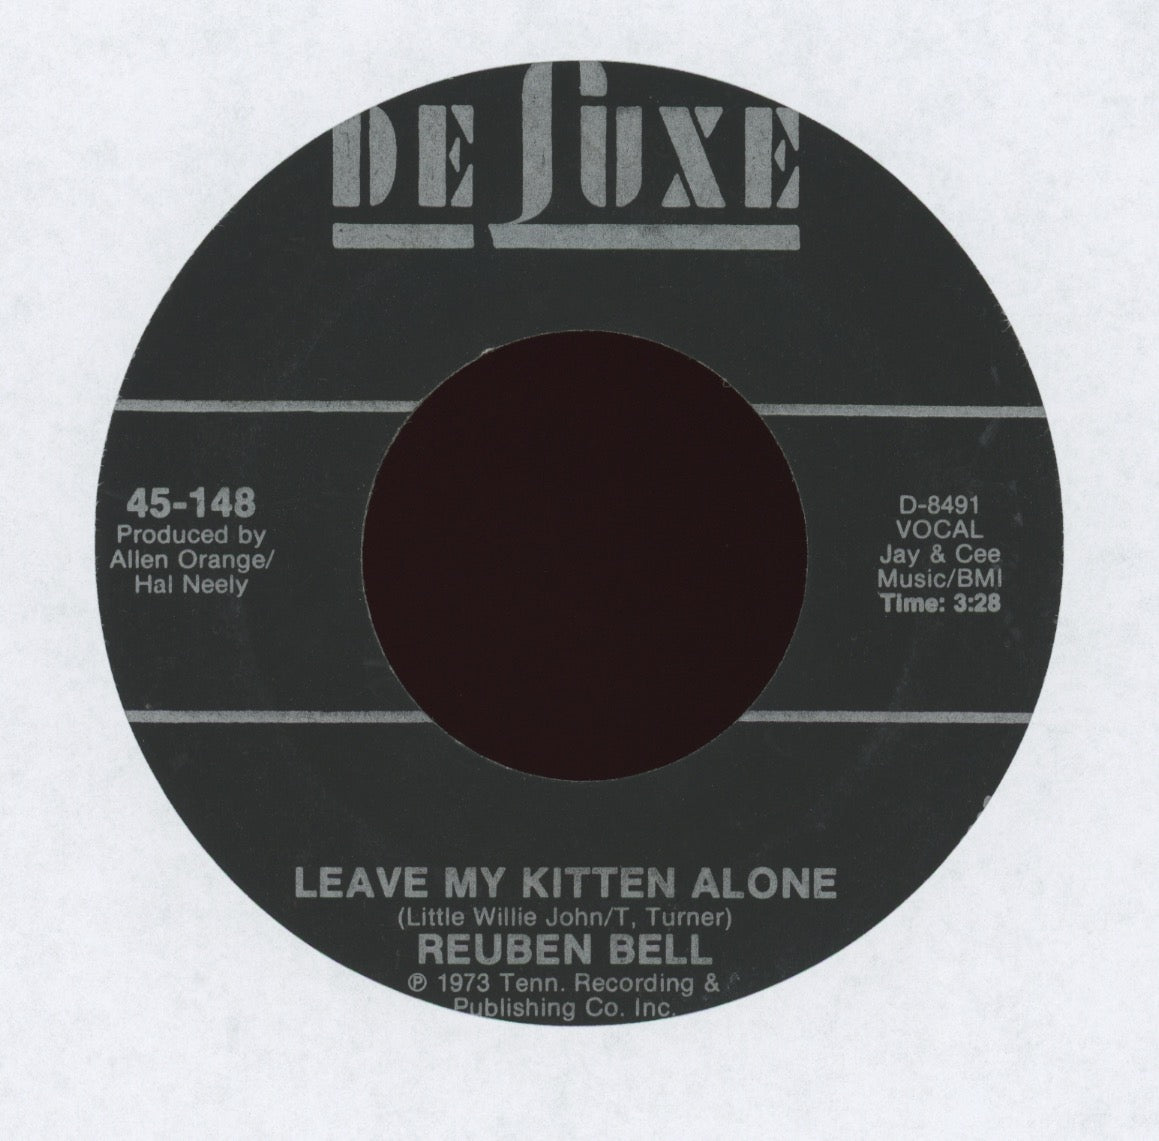 Reuben Bell - Leave My Kitten Alone on DeLuxe